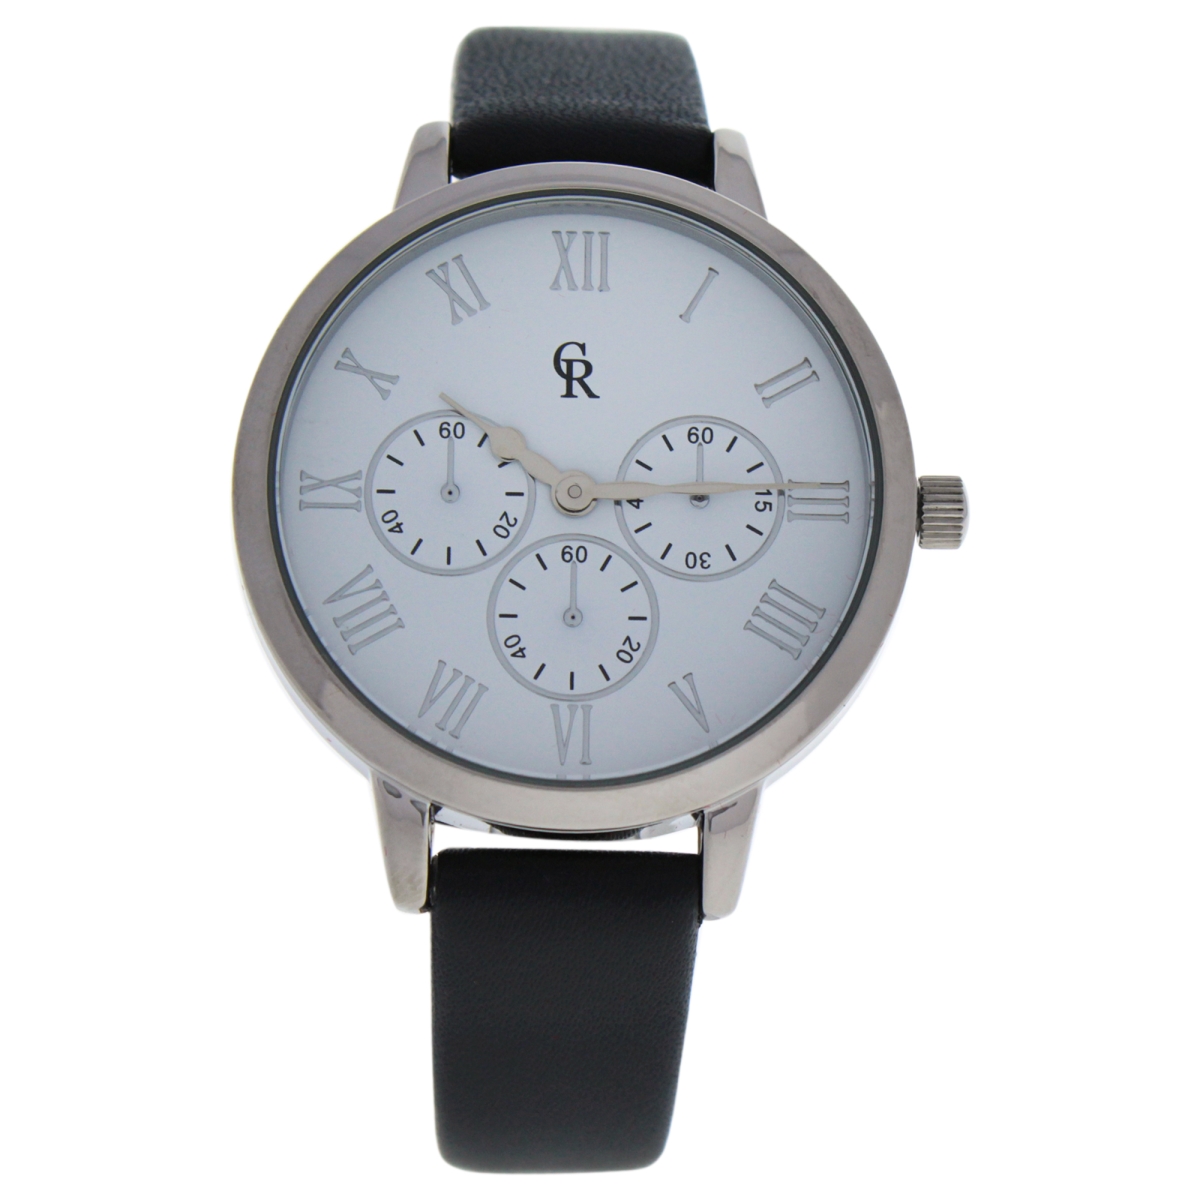 W-wat-1511 La Basic - Silver & Grey Leather Strap Watch For Women - Crb010